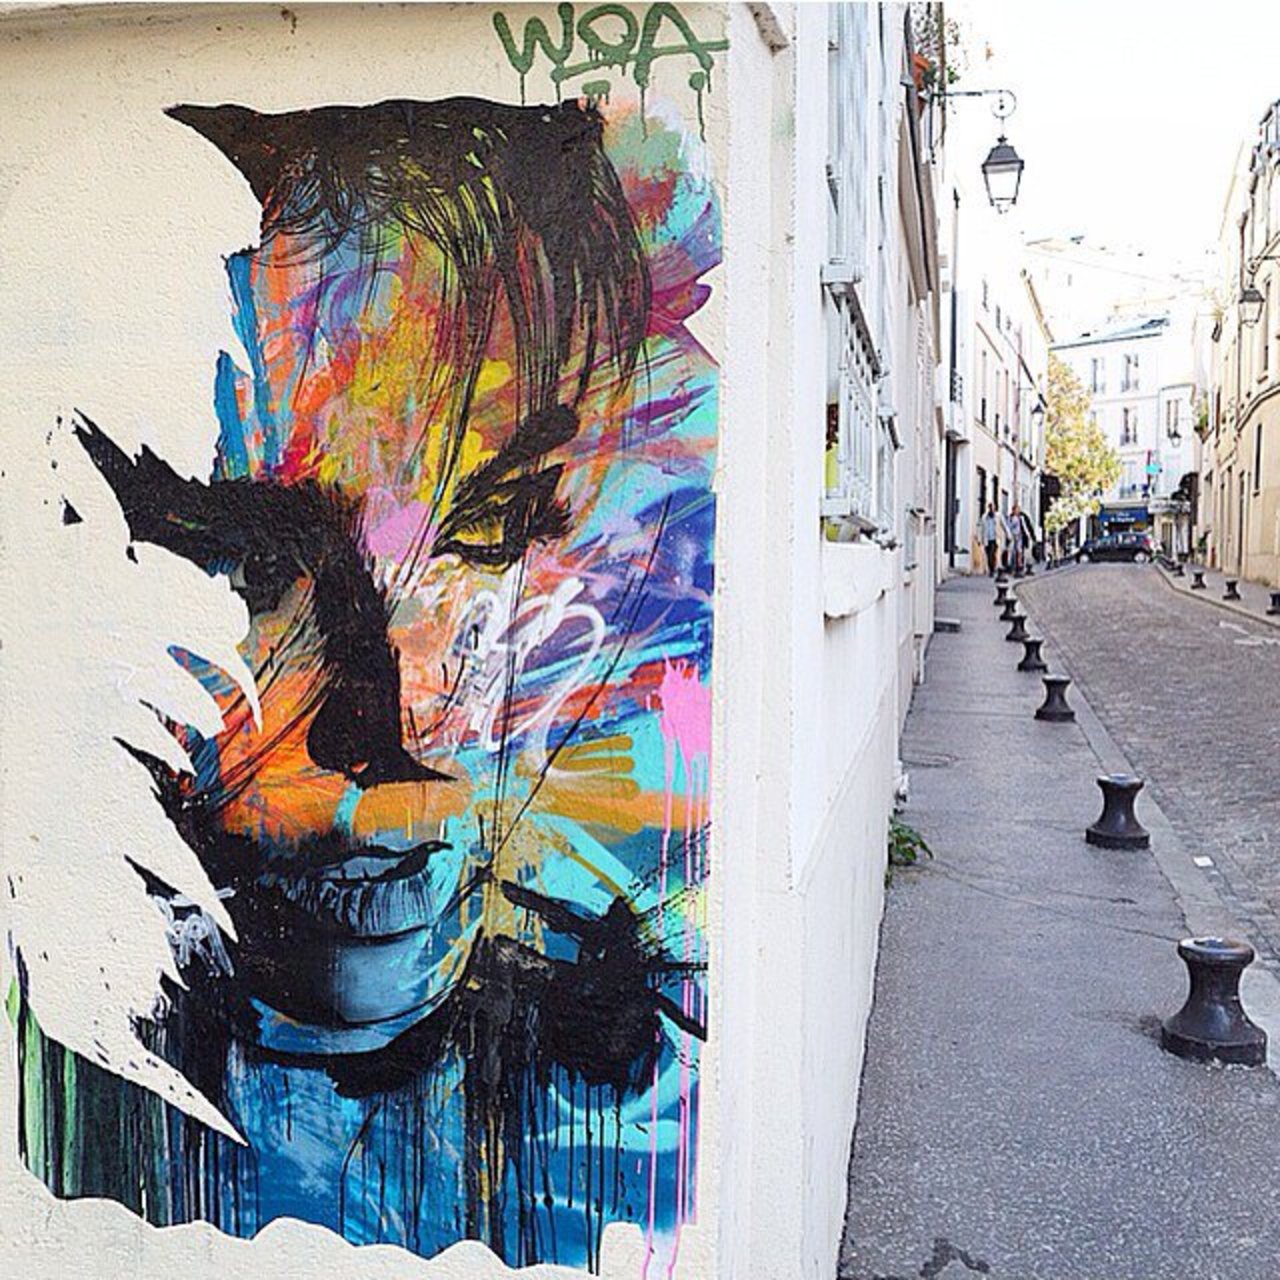 #Paris #graffiti photo by @simonhs http://ift.tt/1i8QjMA #StreetArt https://t.co/ZOz2cLAtum